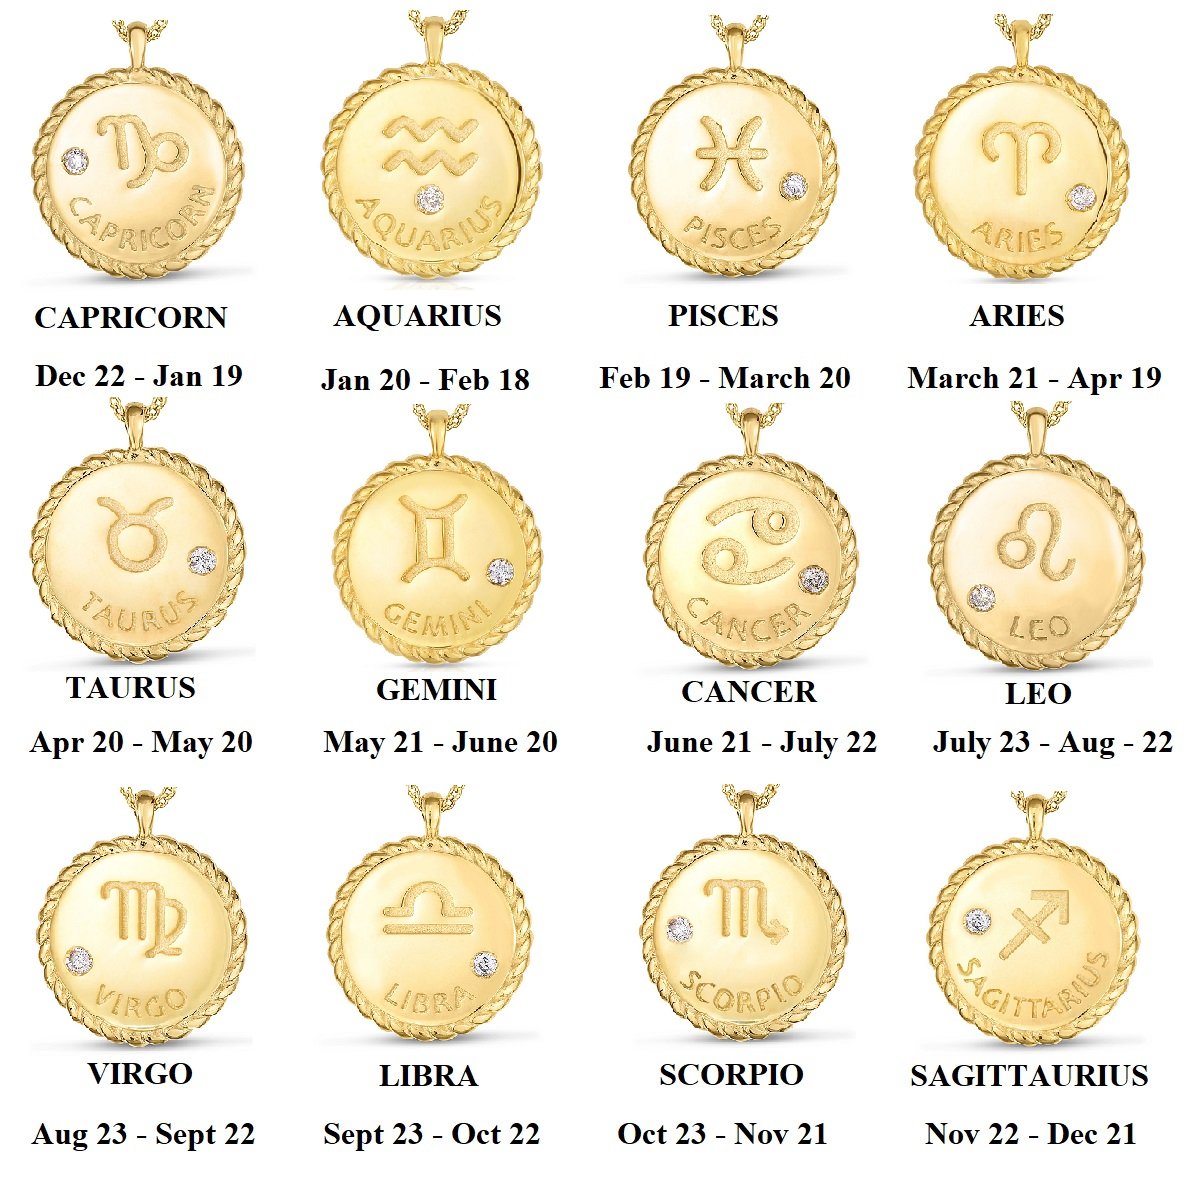 14K Yellow Gold Diamond Zodiac Sign Necklace